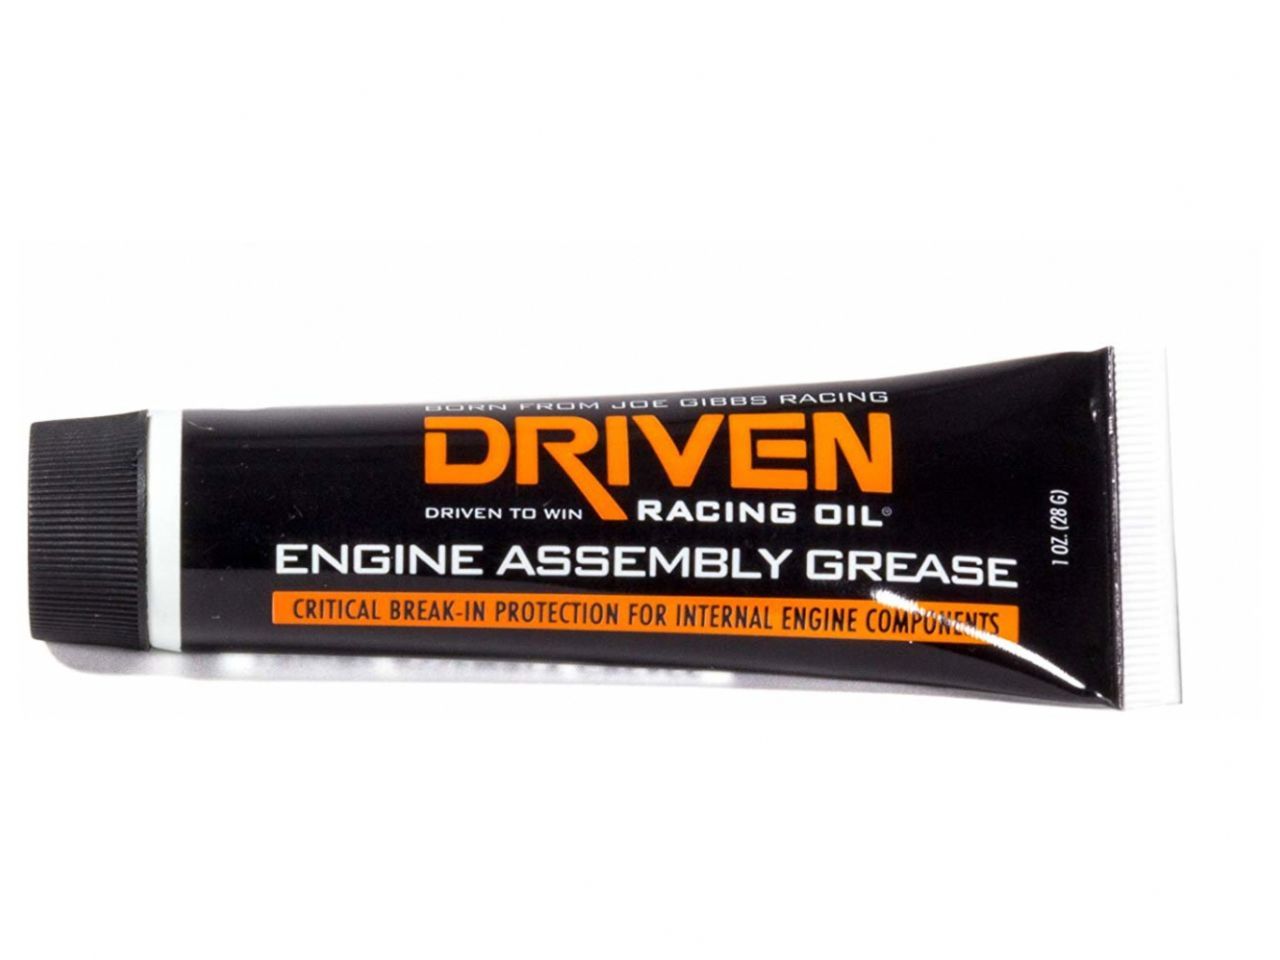 Driven Racing Oil Grease 00732 Item Image